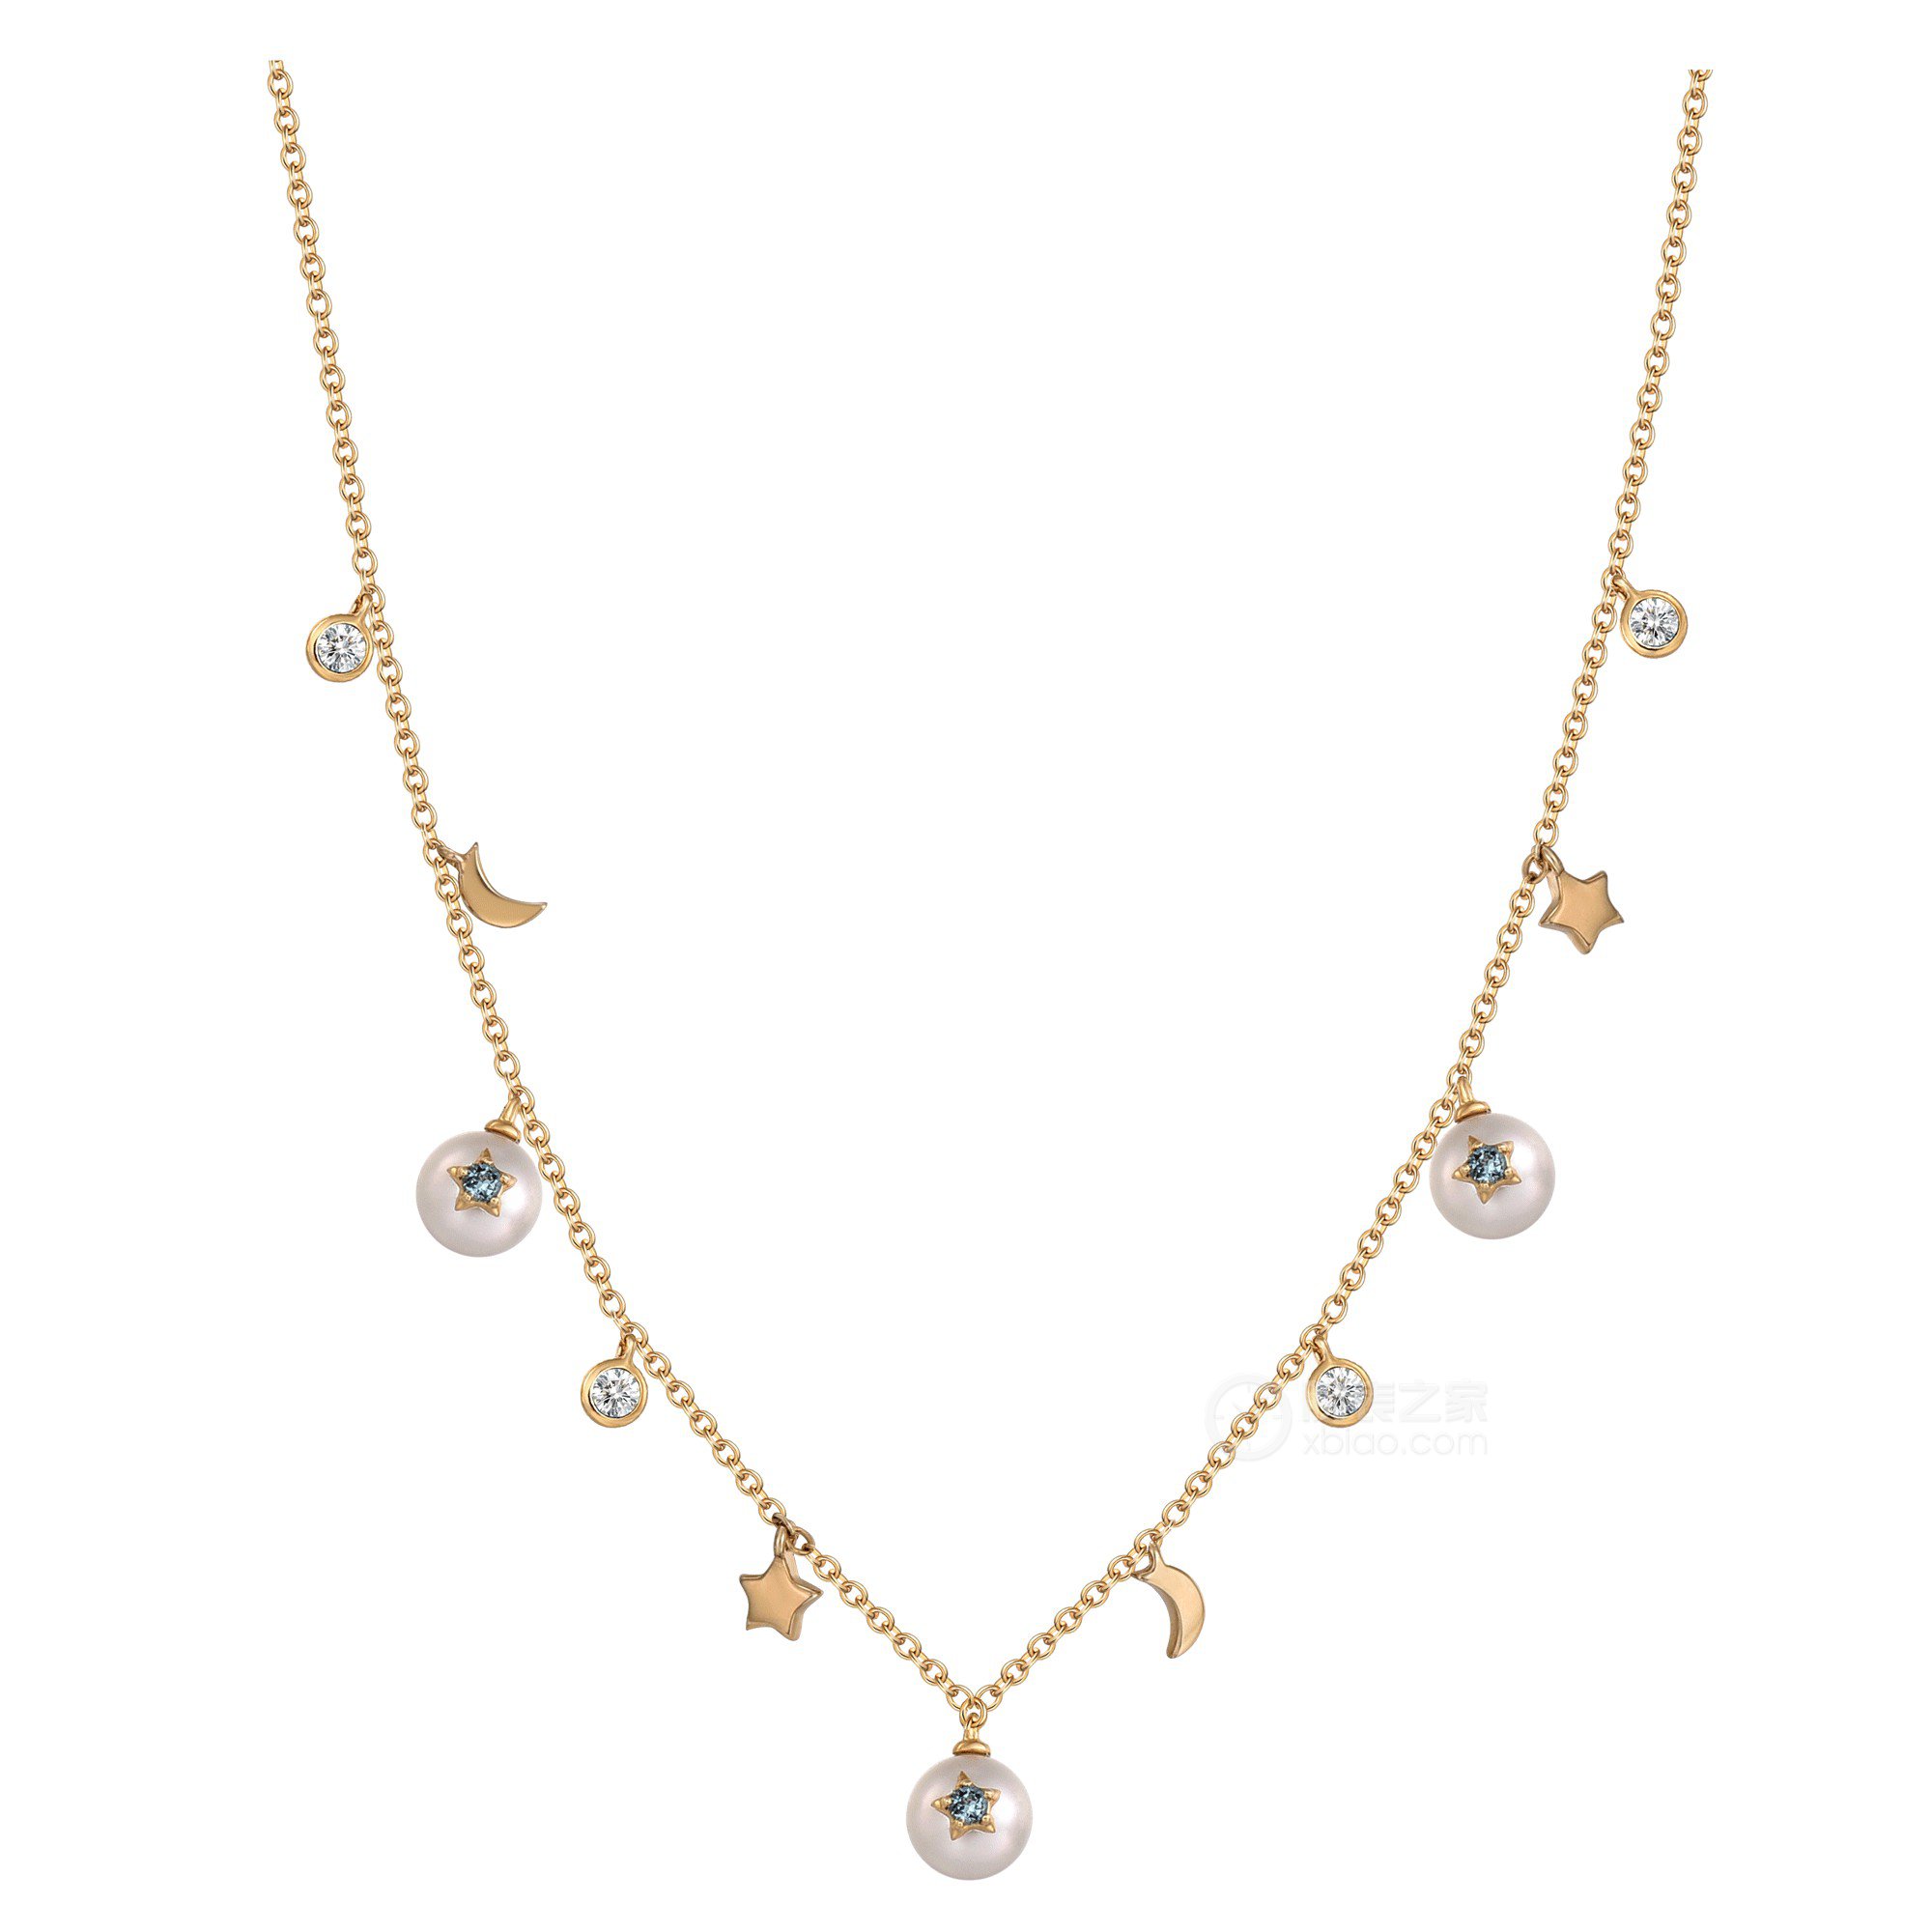 ENZOCOSMOS小宇宙系列星月造型14K金镶珍珠、托帕石项链项链